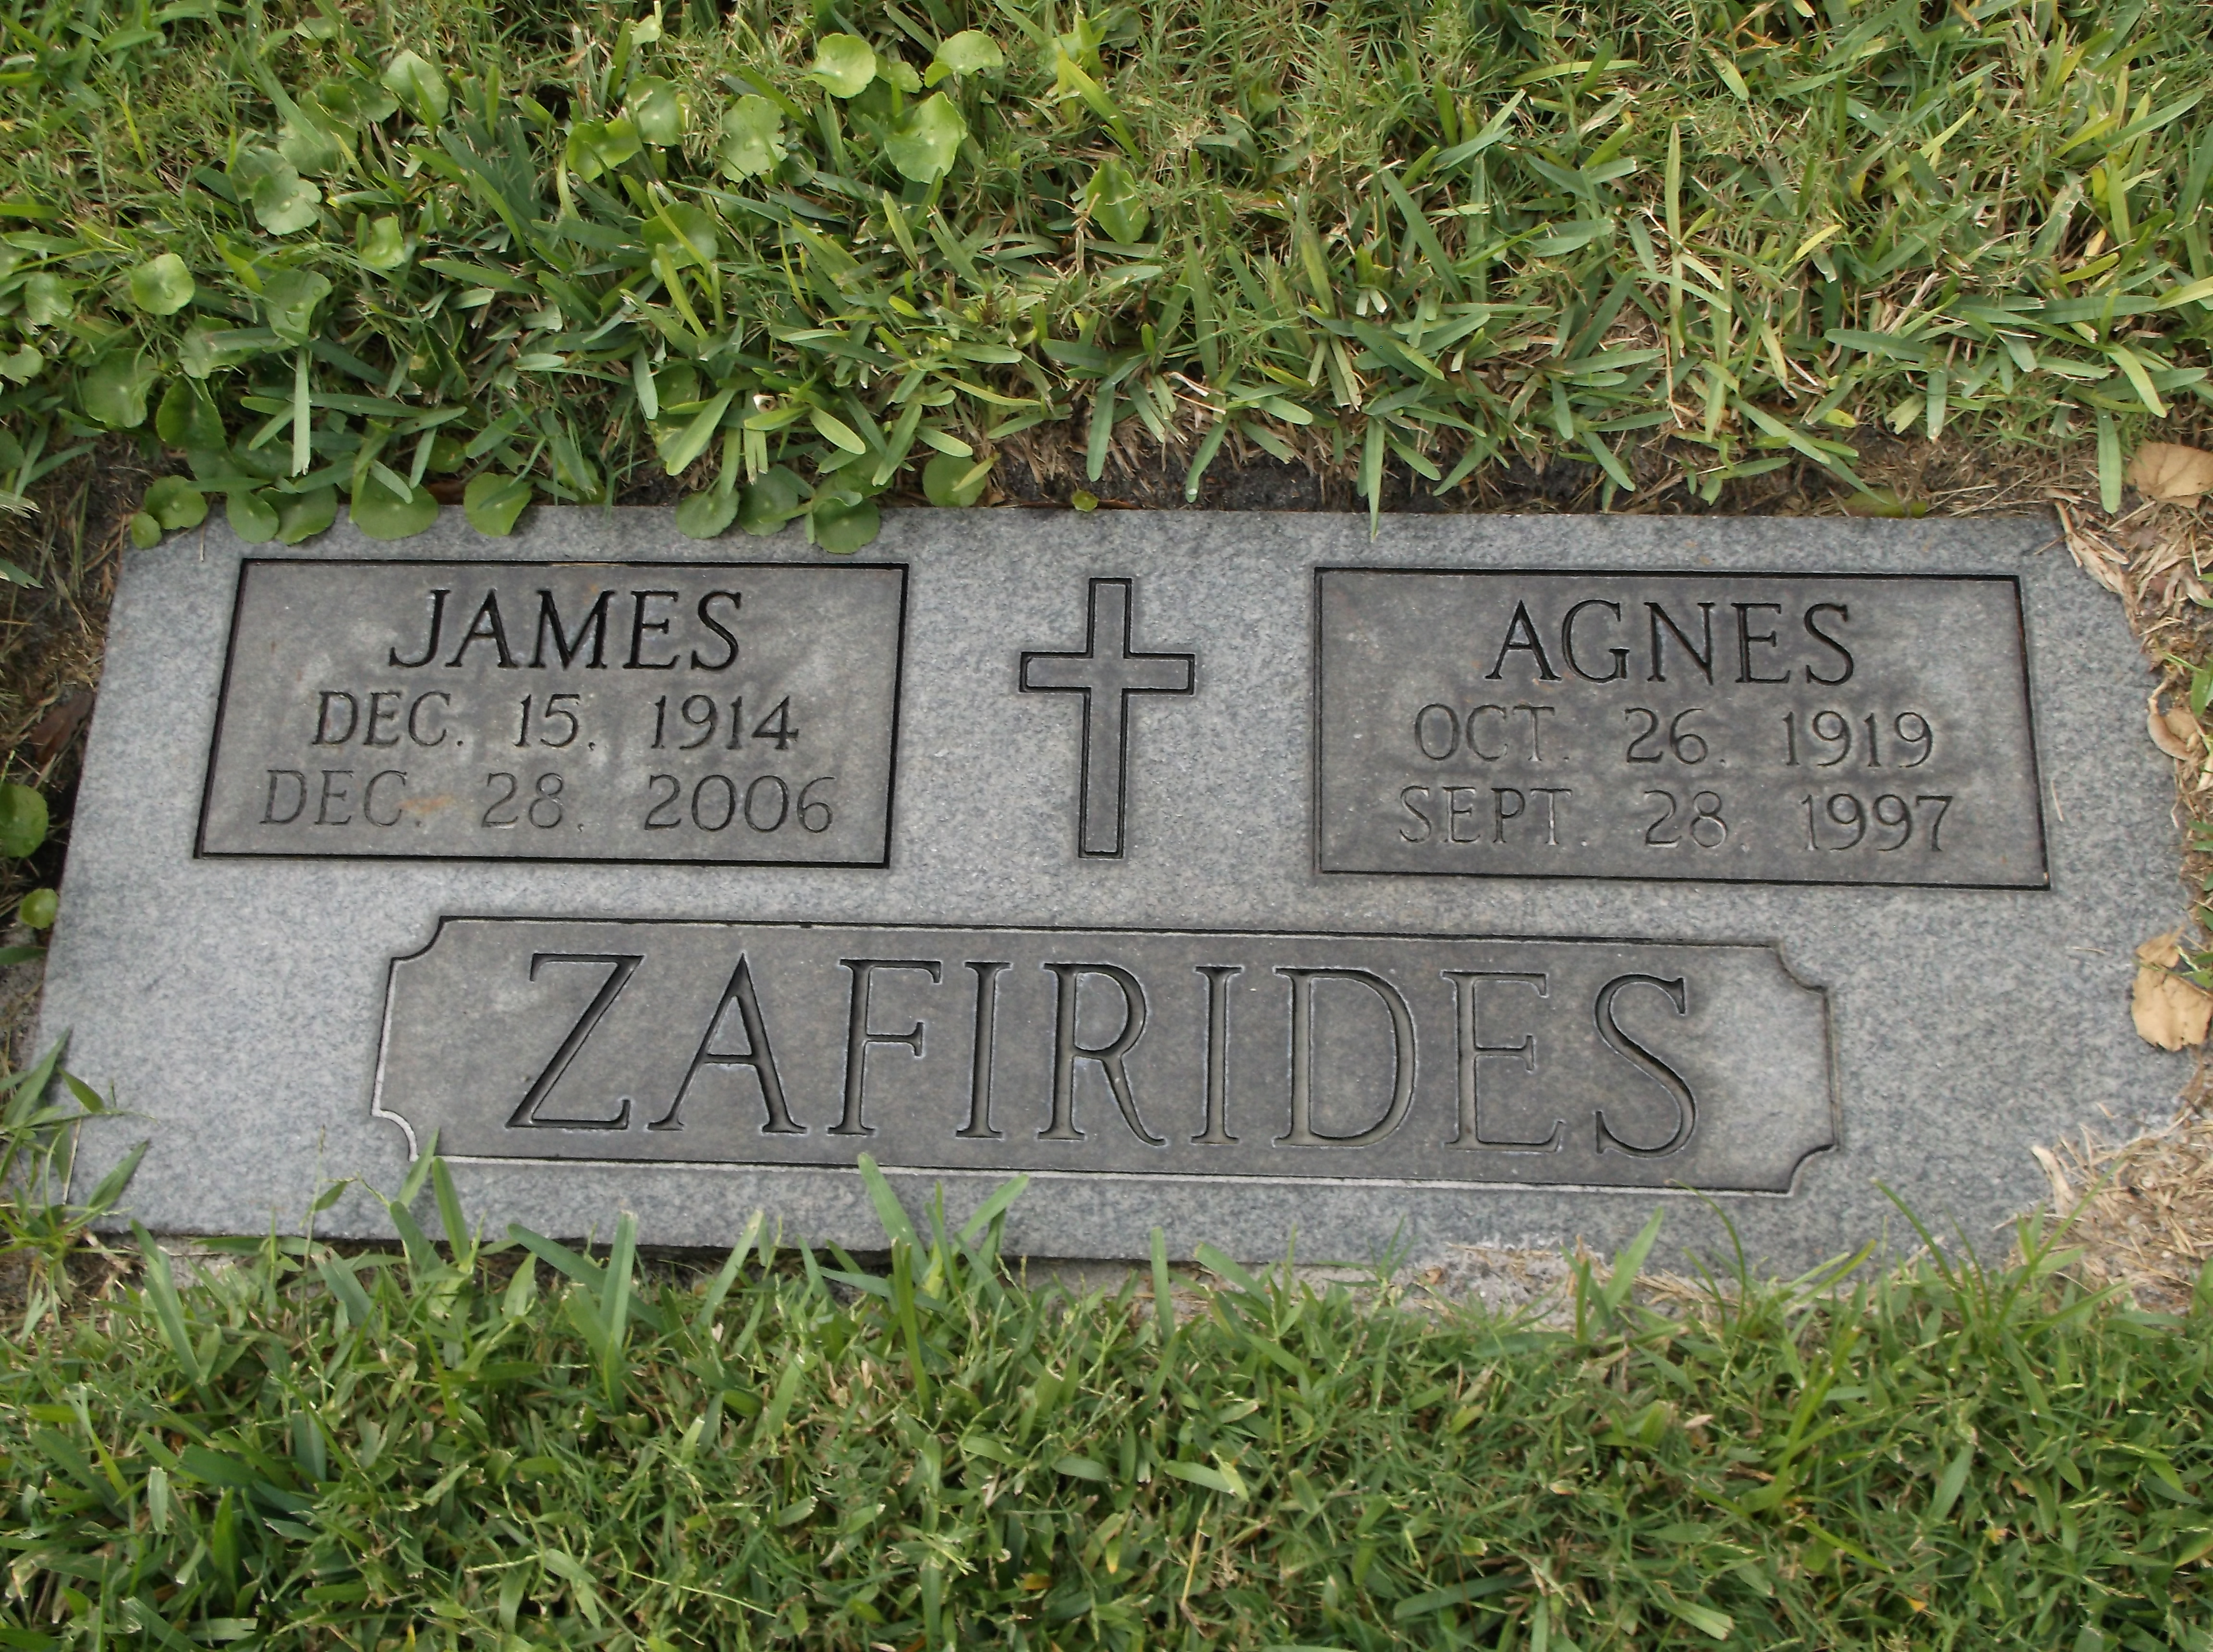 James Zafirides